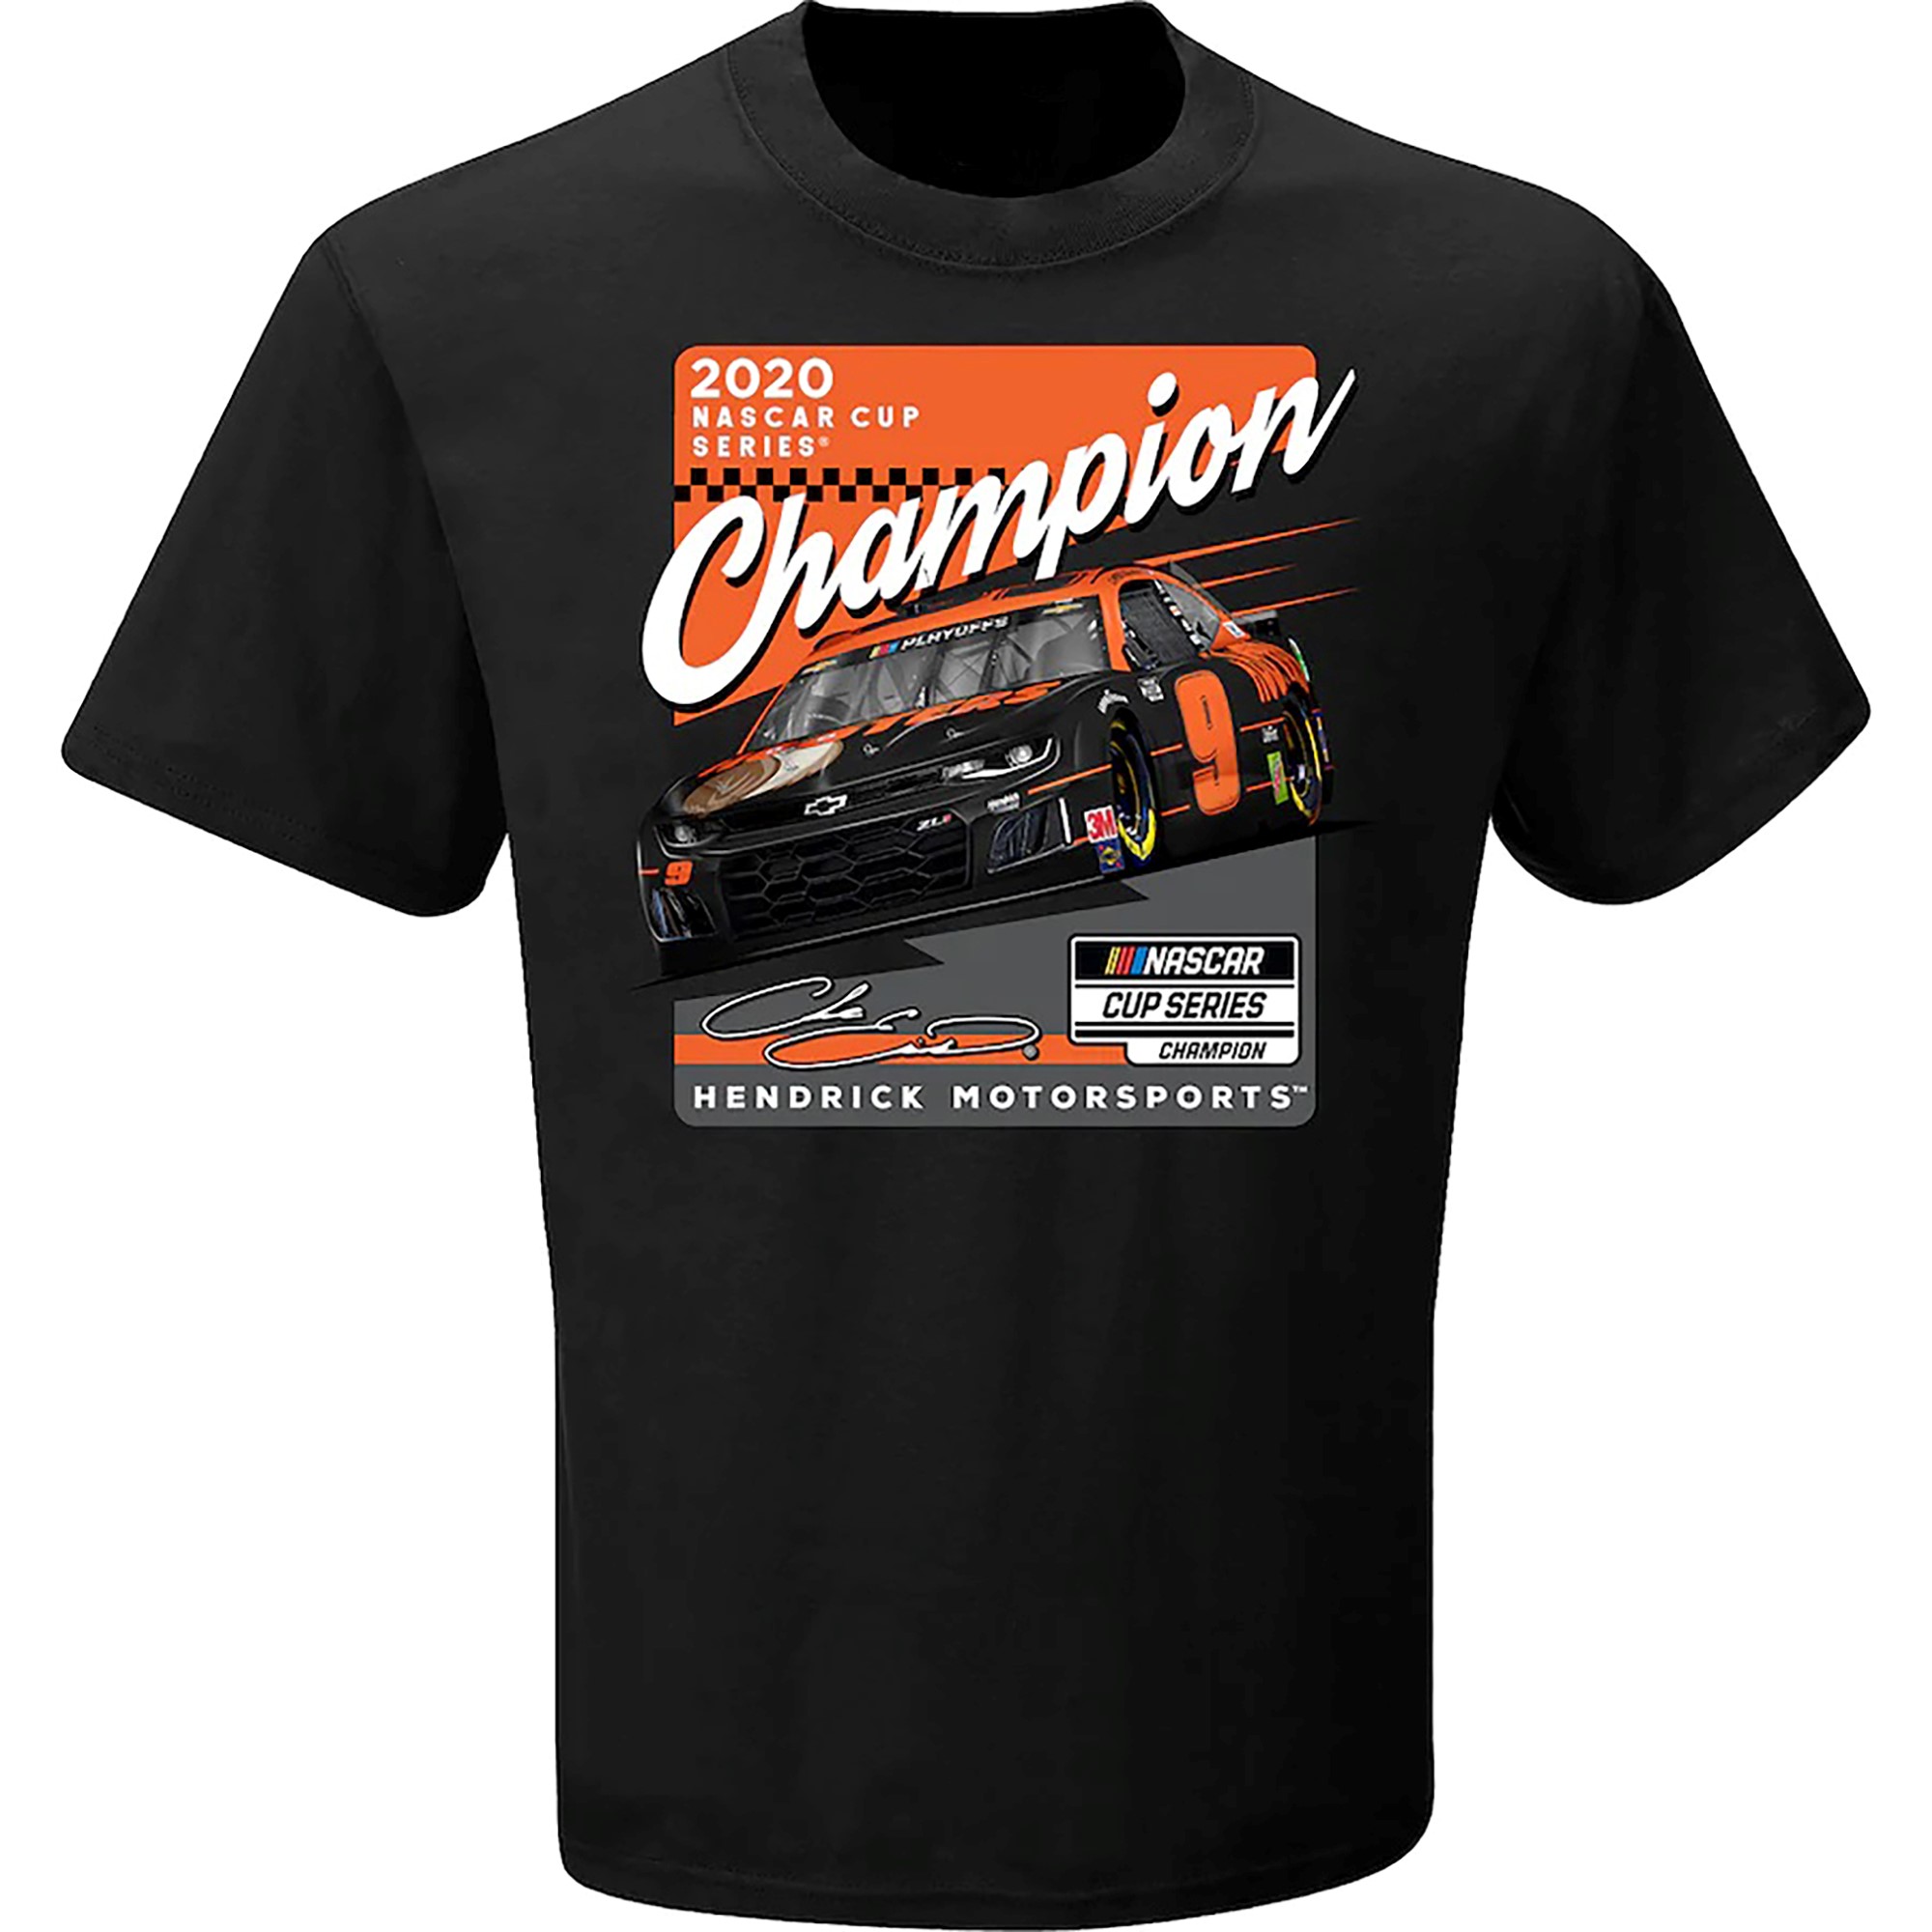 Chase Elliott Hendrick Motorsports Shirt 2020 Nascar Cup Series Champion T-shirt